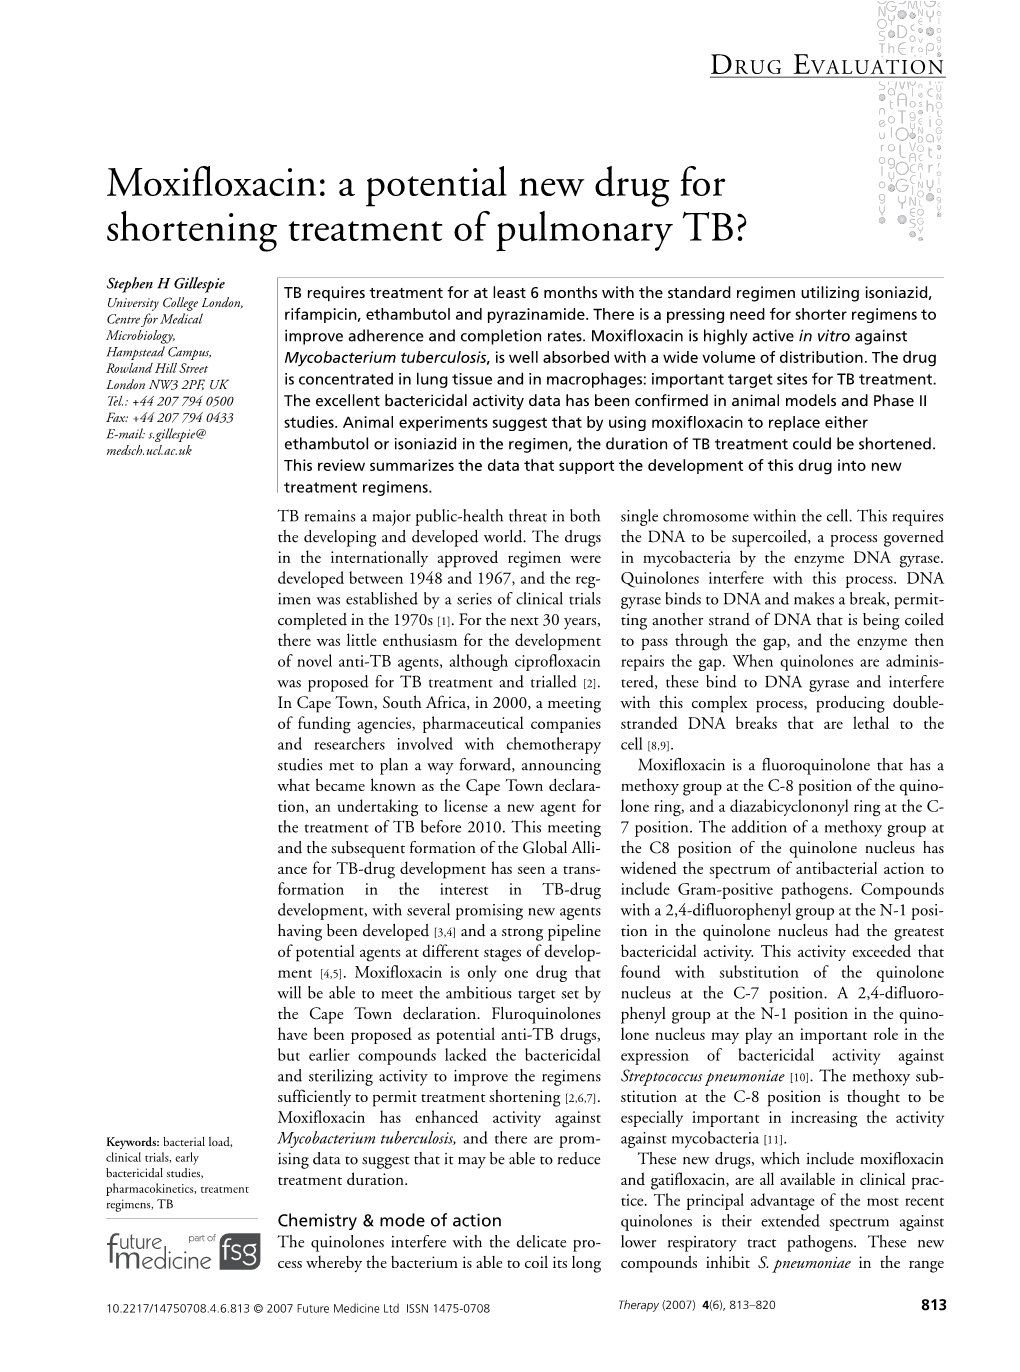 Moxifloxacin: a Potential New Drug for Shortening Treatment of Pulmonary TB?